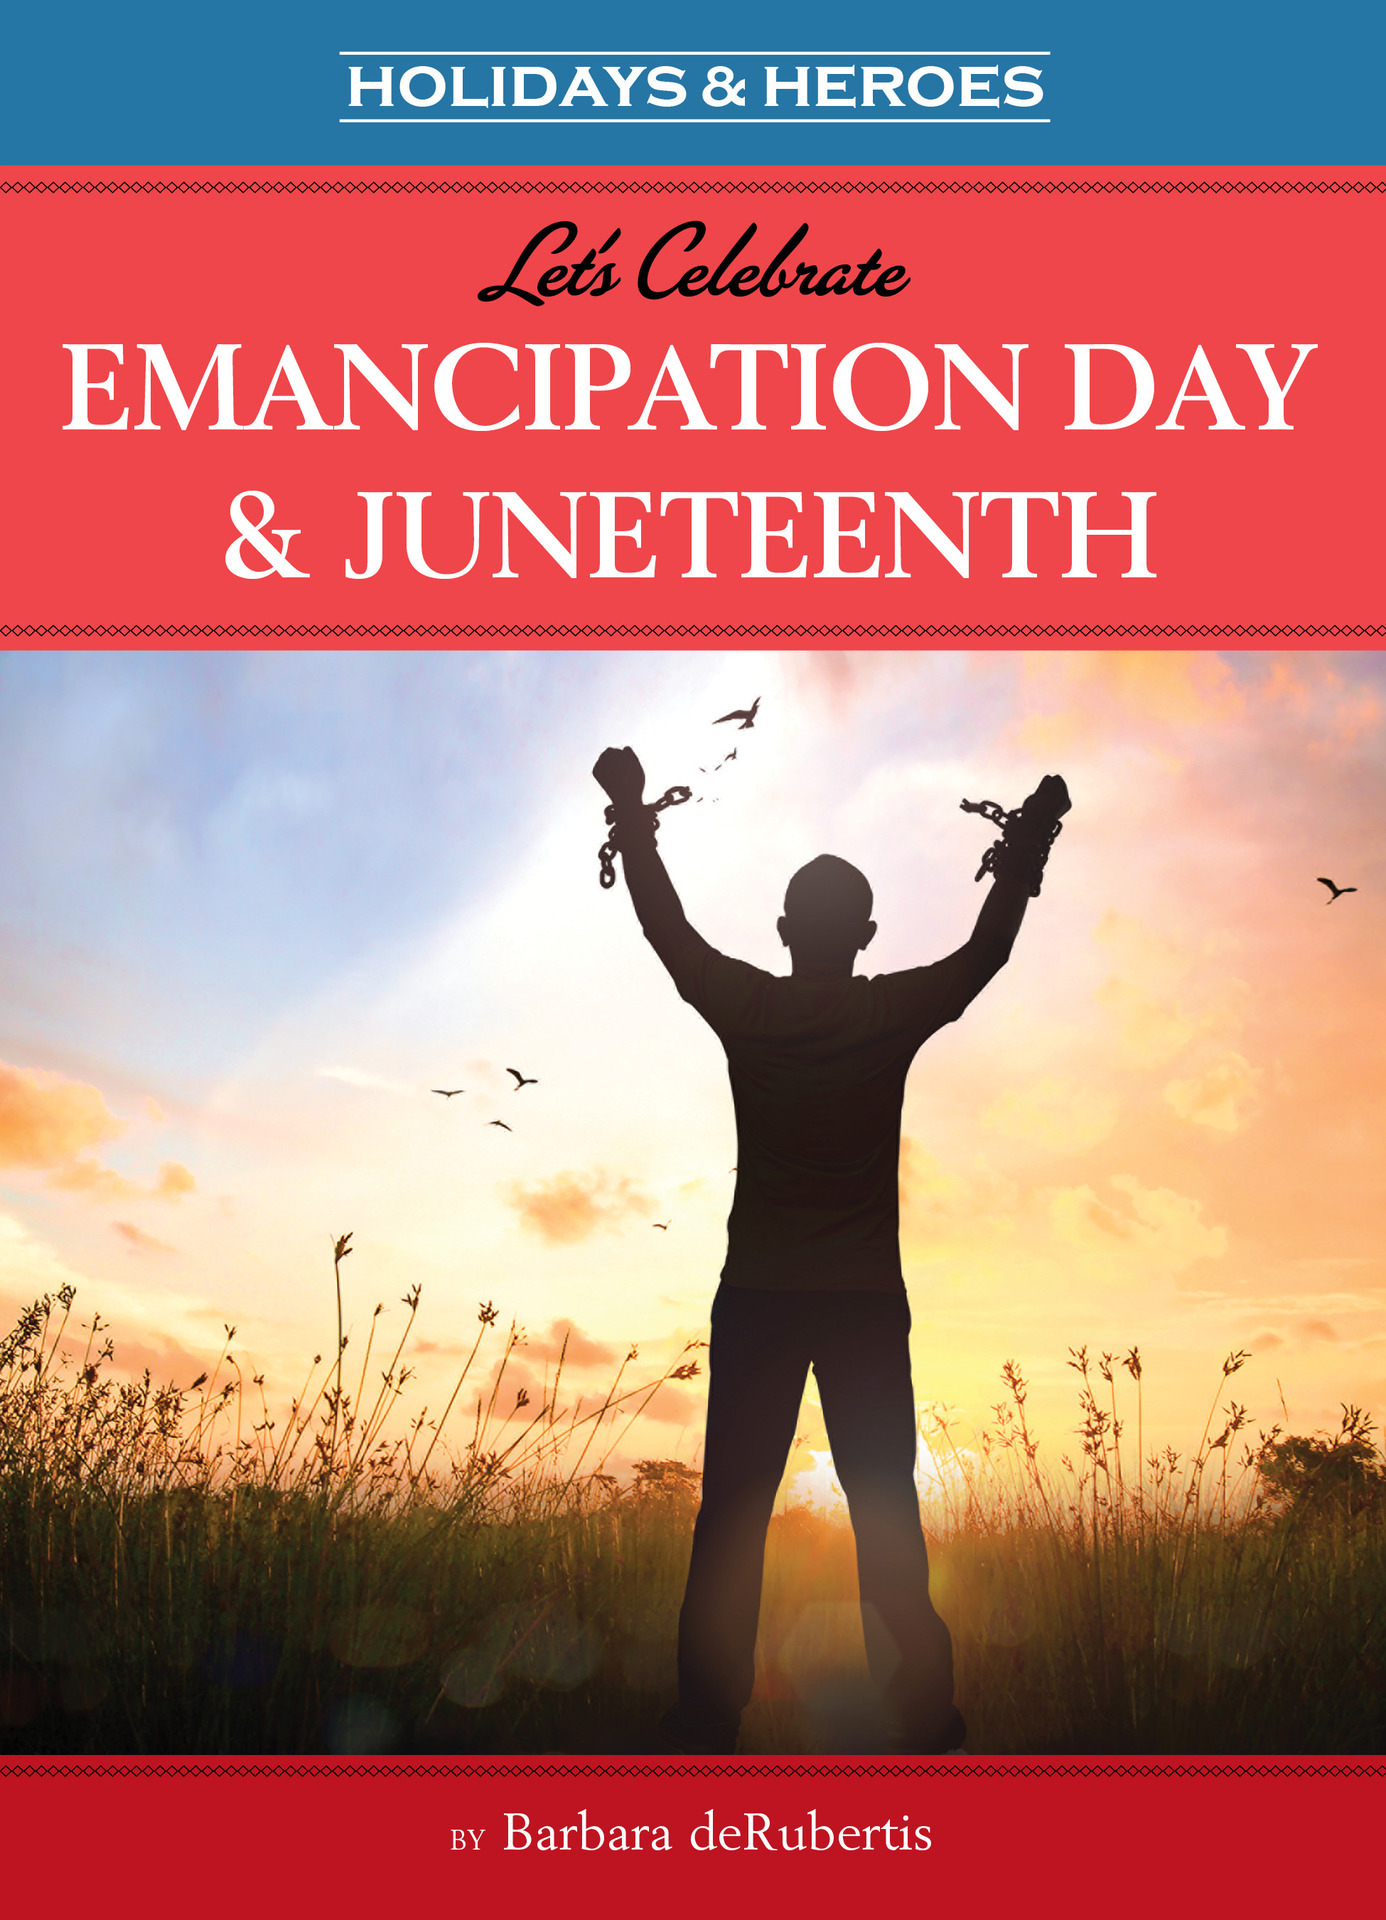 Let's Celebrate Emancipation Day & Juneteenth Image